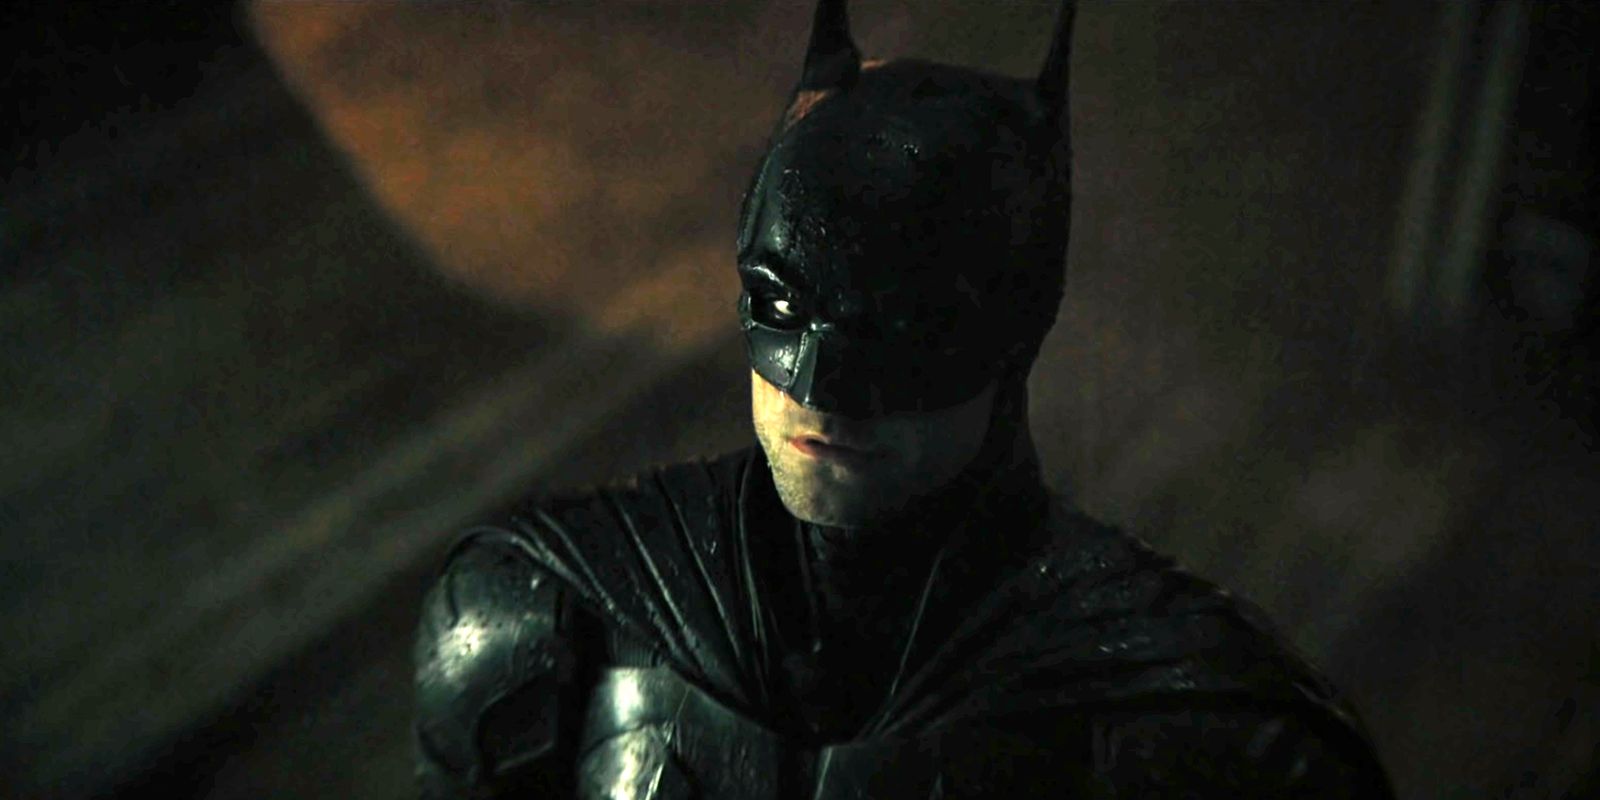 Robert Pattinson as Batman in The Batman looking up